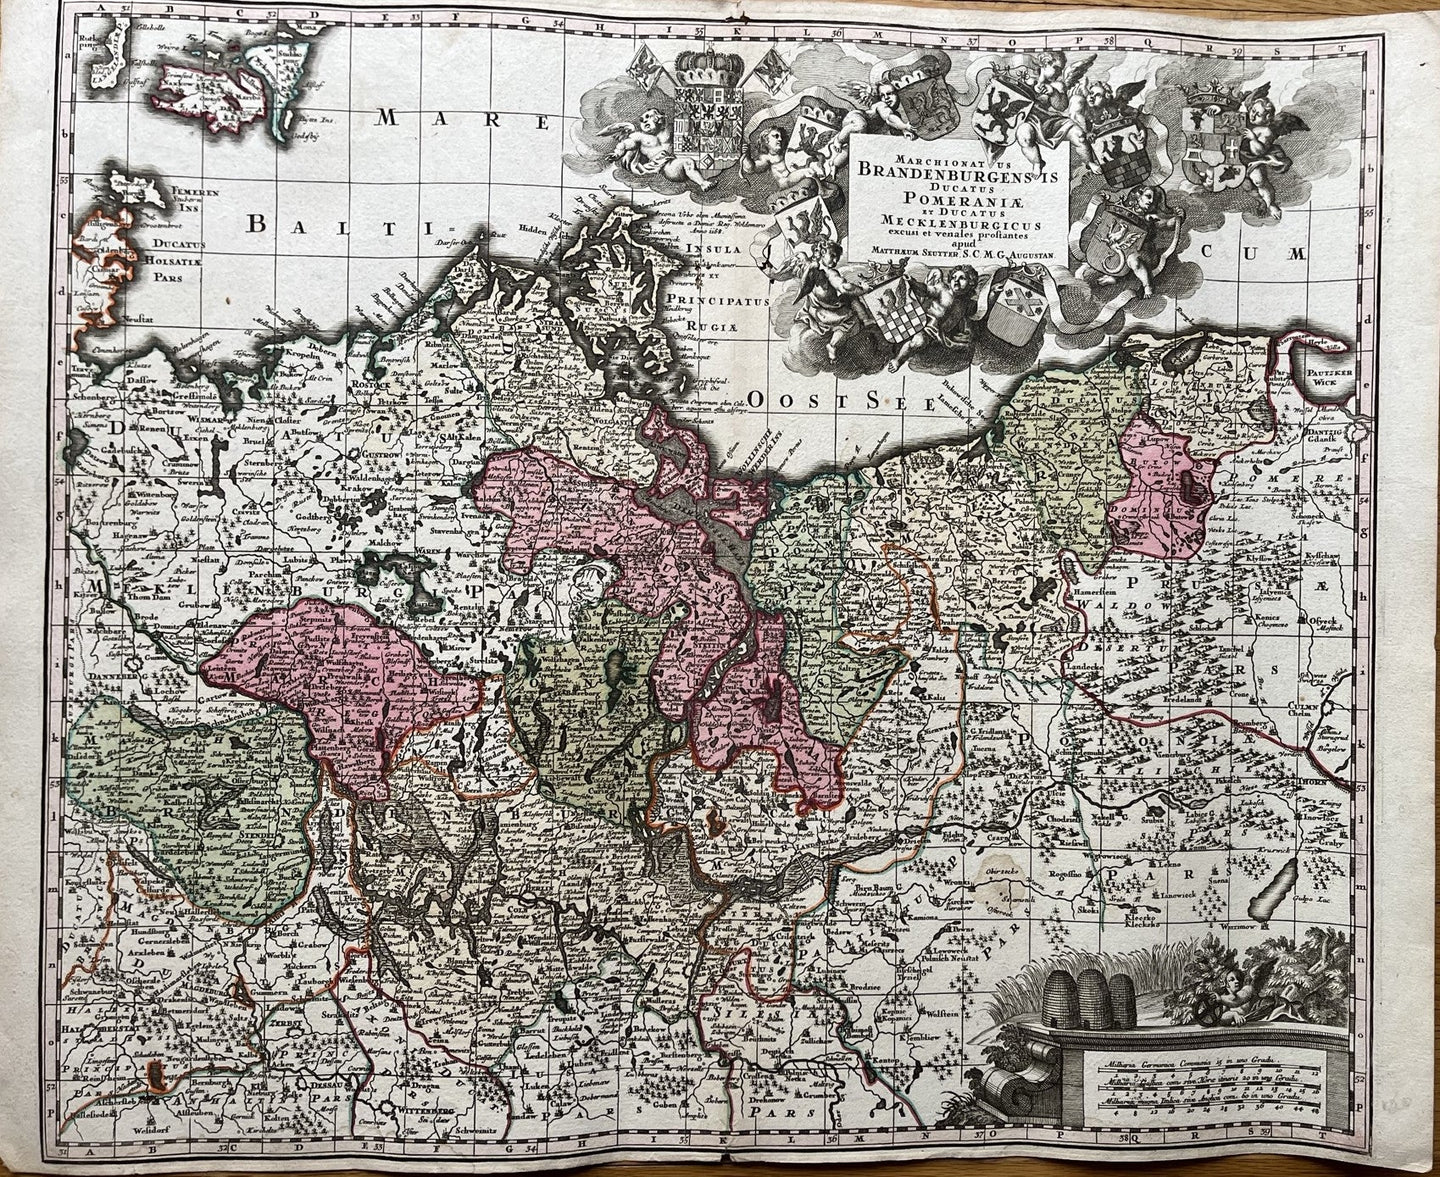 Genuine-Antique-Hand-colored-Map-Germany-Brandenburgens-Ducatus-Pomeraniae-et-Ducatus-Mecklenburgicus--Seutter-Maps-Of-Antiquity